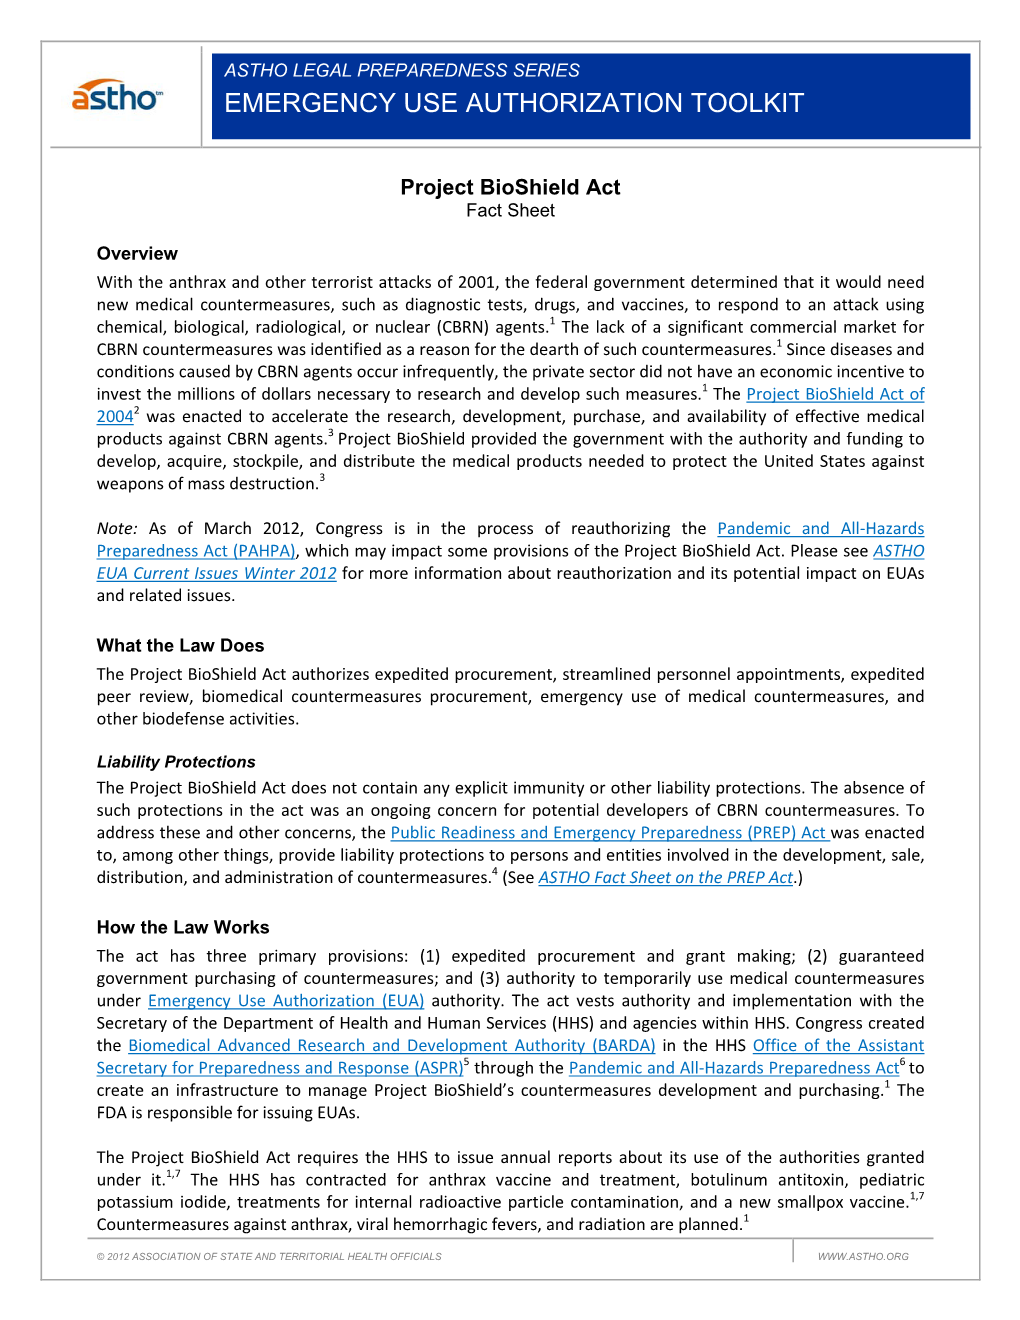 Project Bioshield Act Fact Sheet